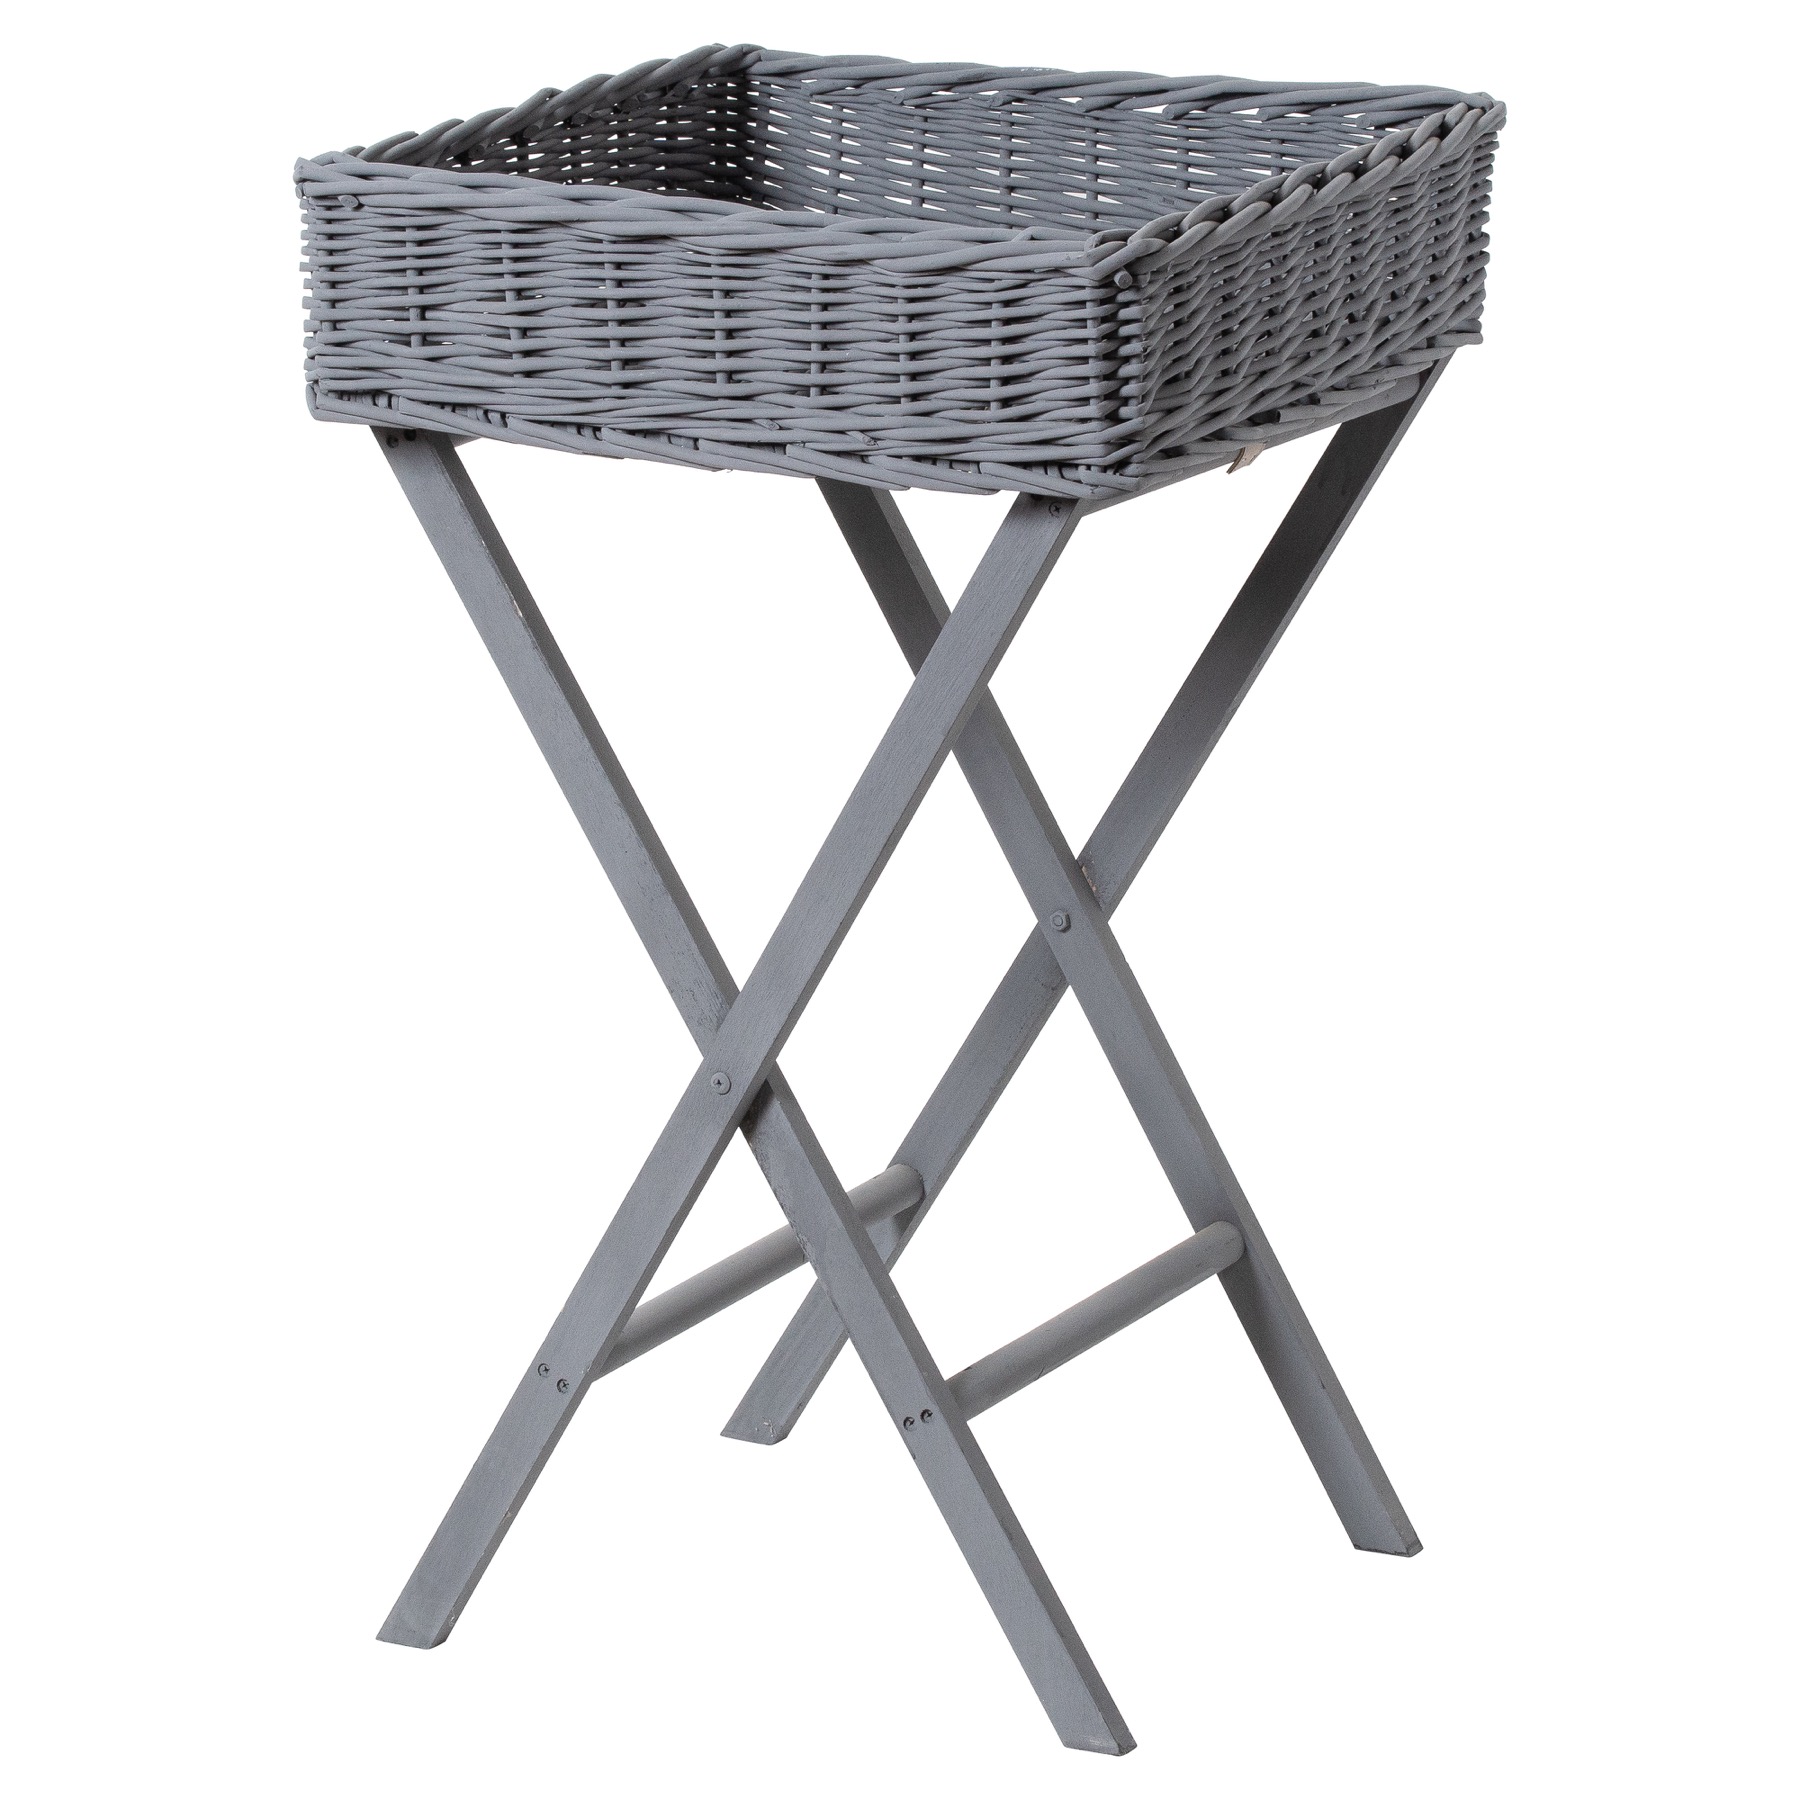 Large Grey Wicker Basket Butler Tray - Image 1